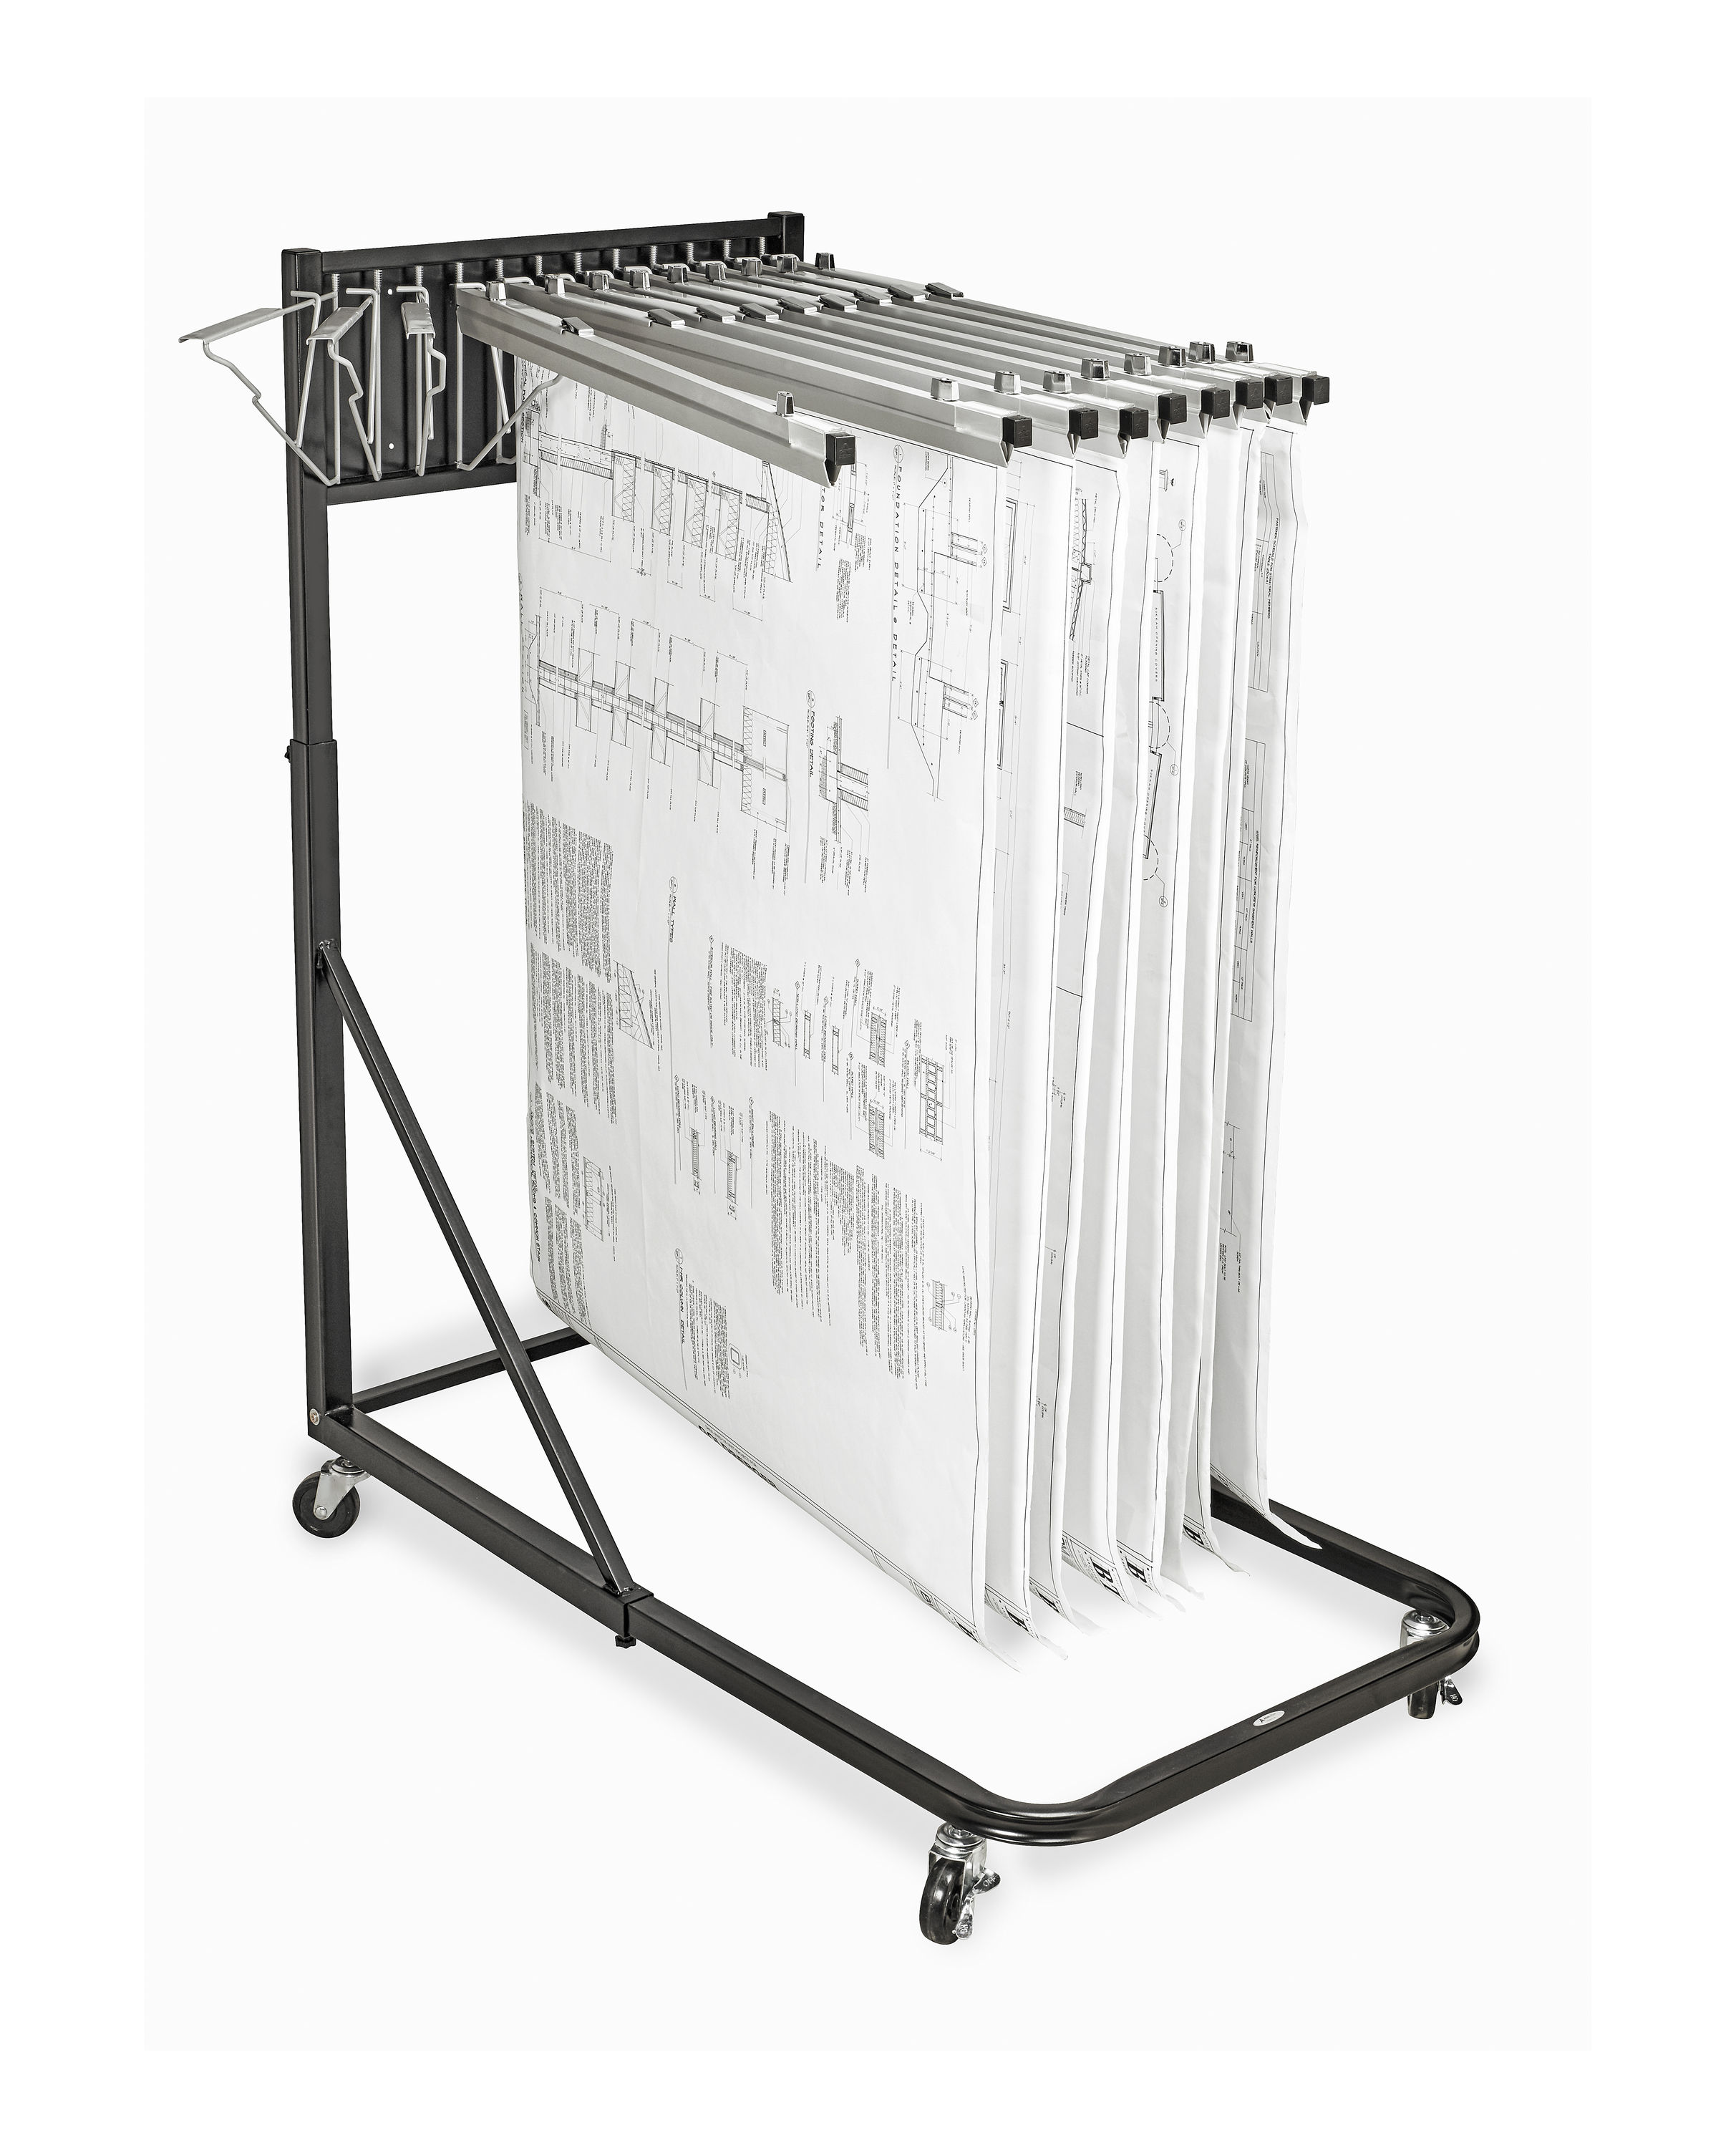 20 Slots Blueprint Poster Storage Rack Metal Roll File Storage Cart with  Wheels